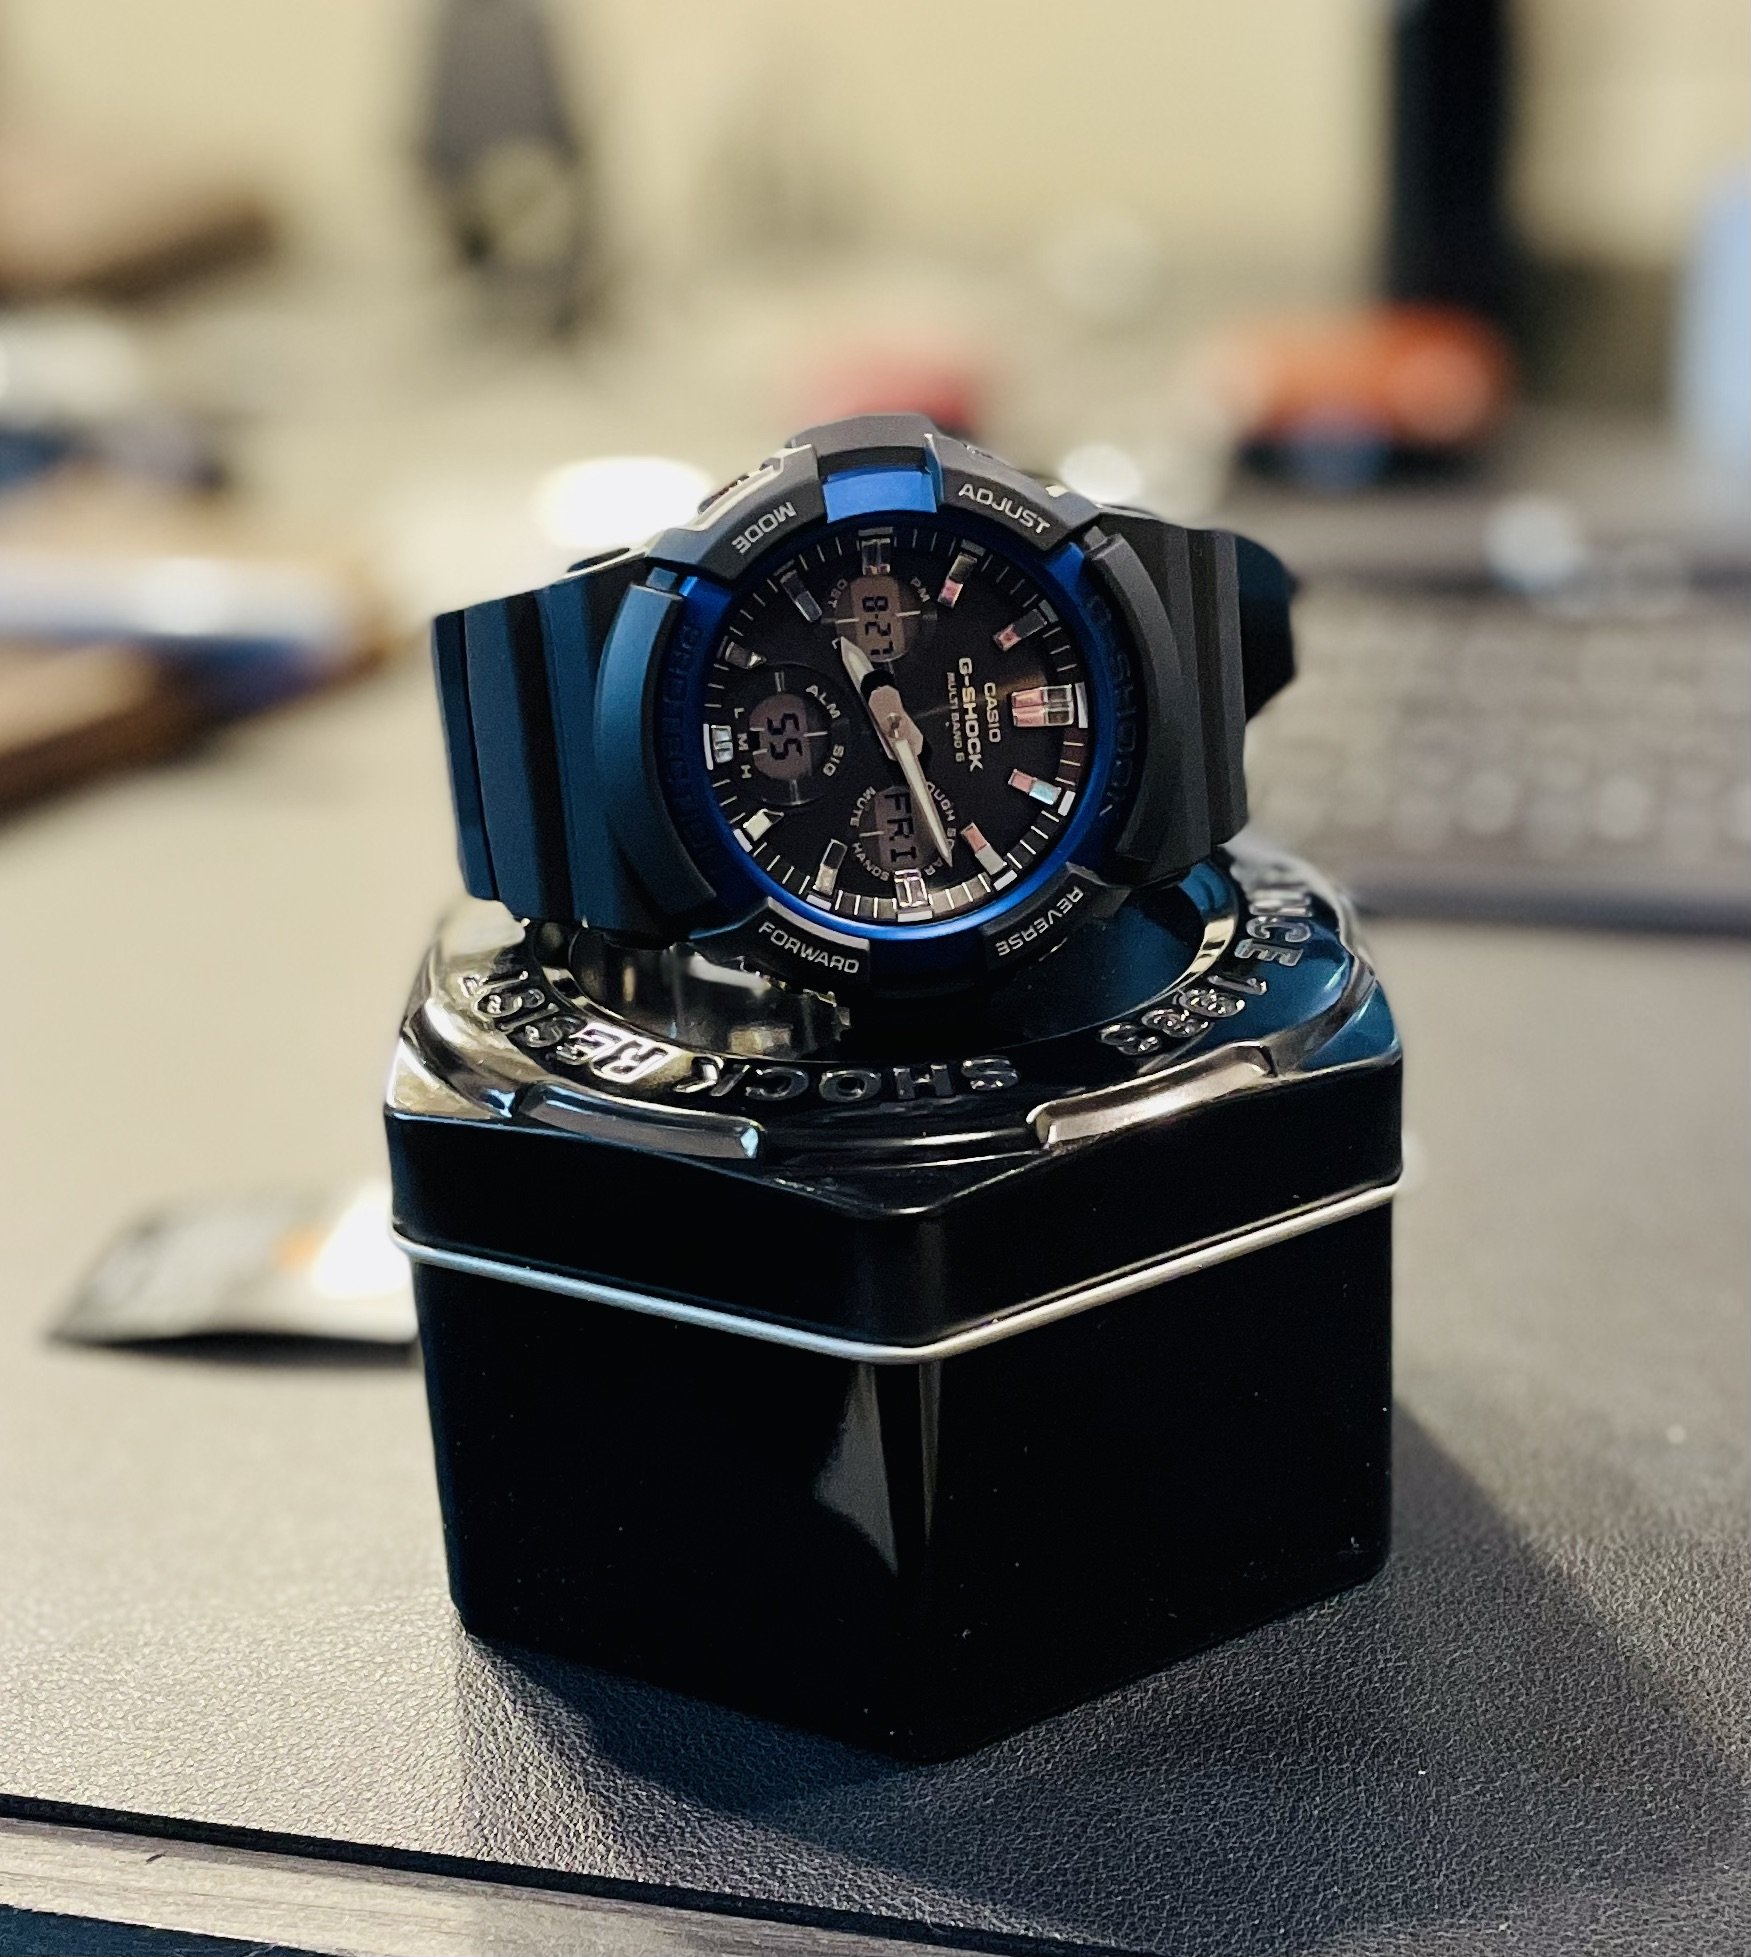 FS: Casio G-Shock GAW-100B-1A2ER - Blue | WatchCharts